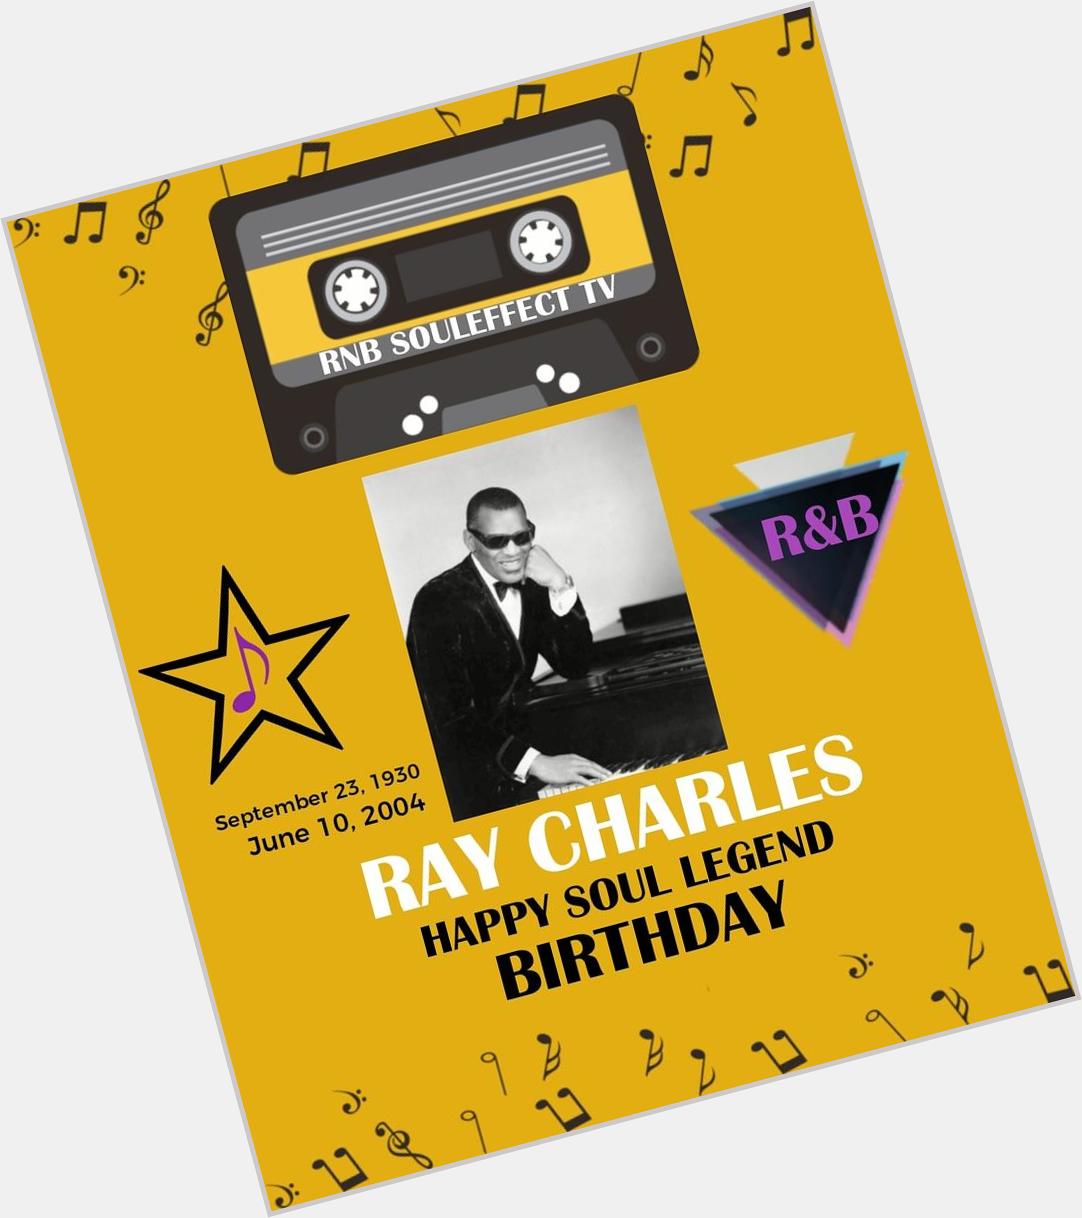 Happy Soul Legend Birthday Ray Charles      